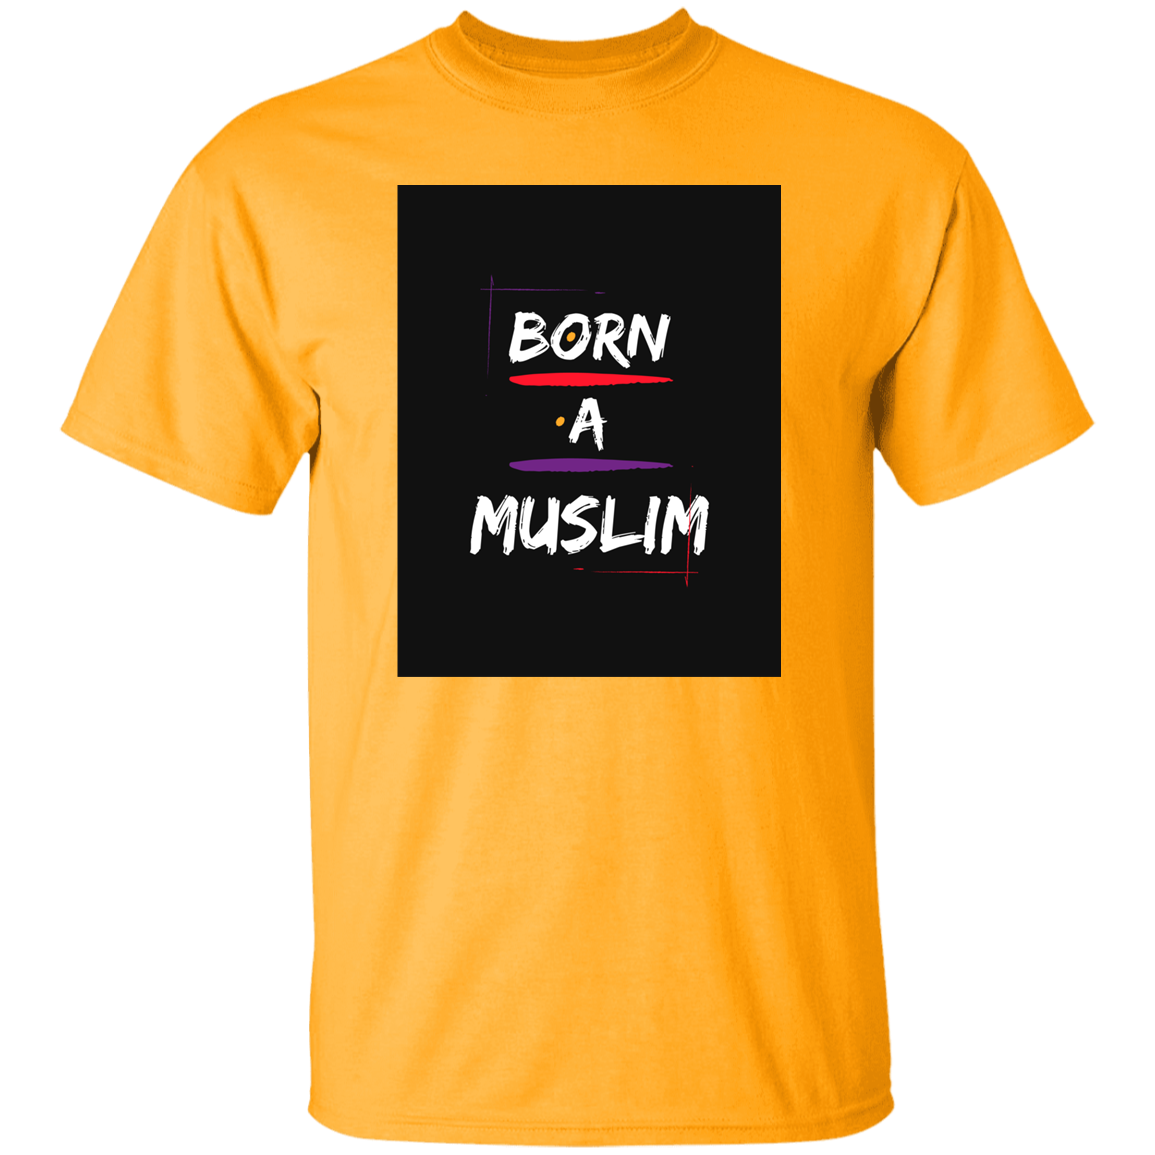 BORN A MUSLIM  T-Shirt (MORE COLOR OPTIONS)